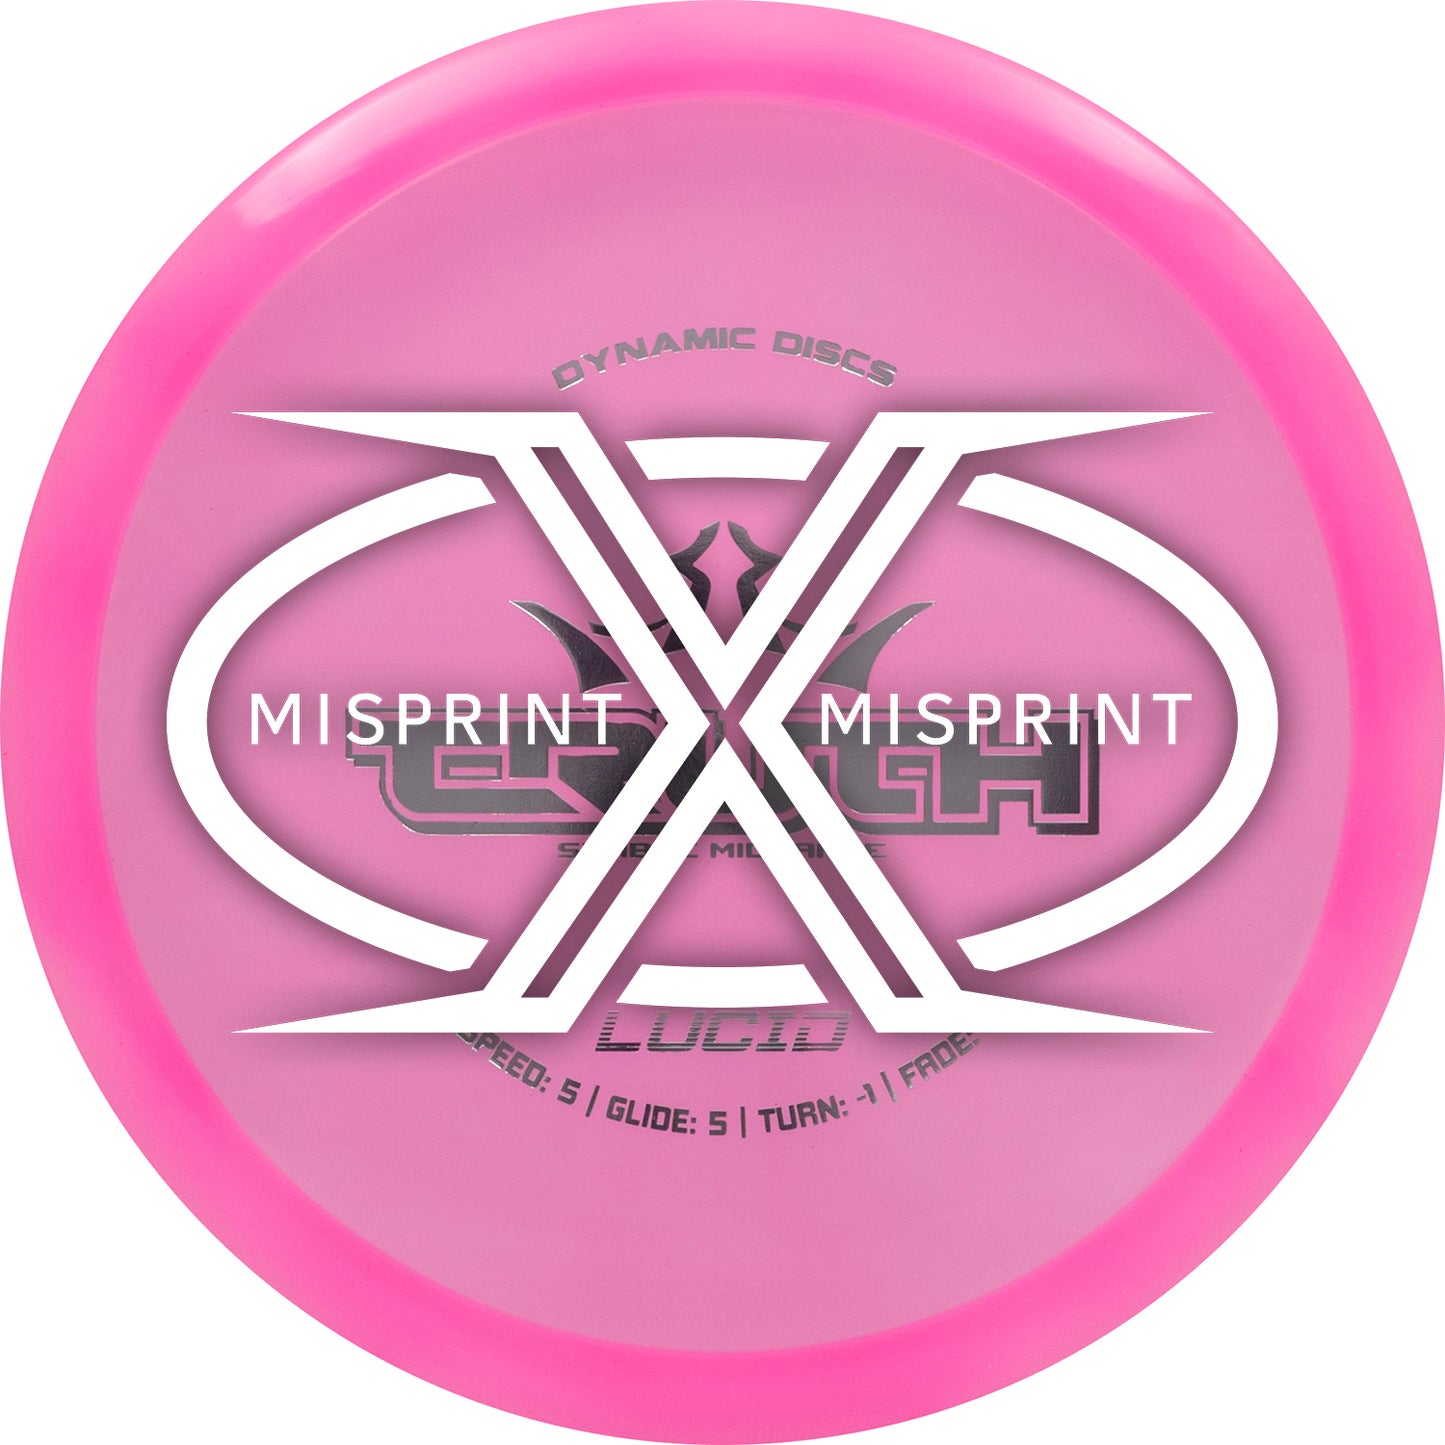 Misprint Dynamic Discs Lucid Truth